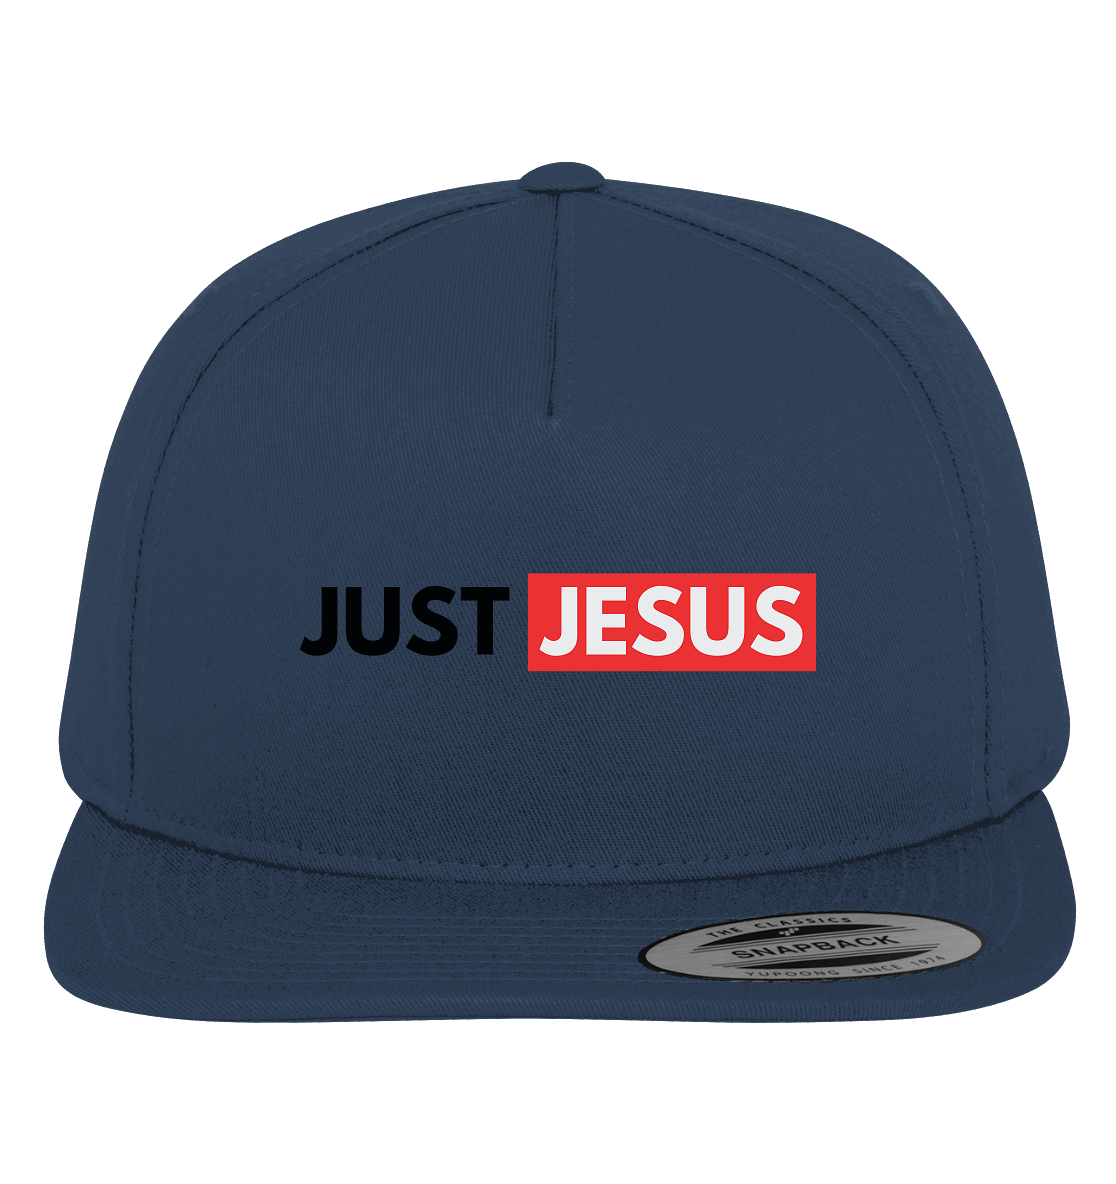 Einfach nur Jesus - Premium Snapback - Kappe